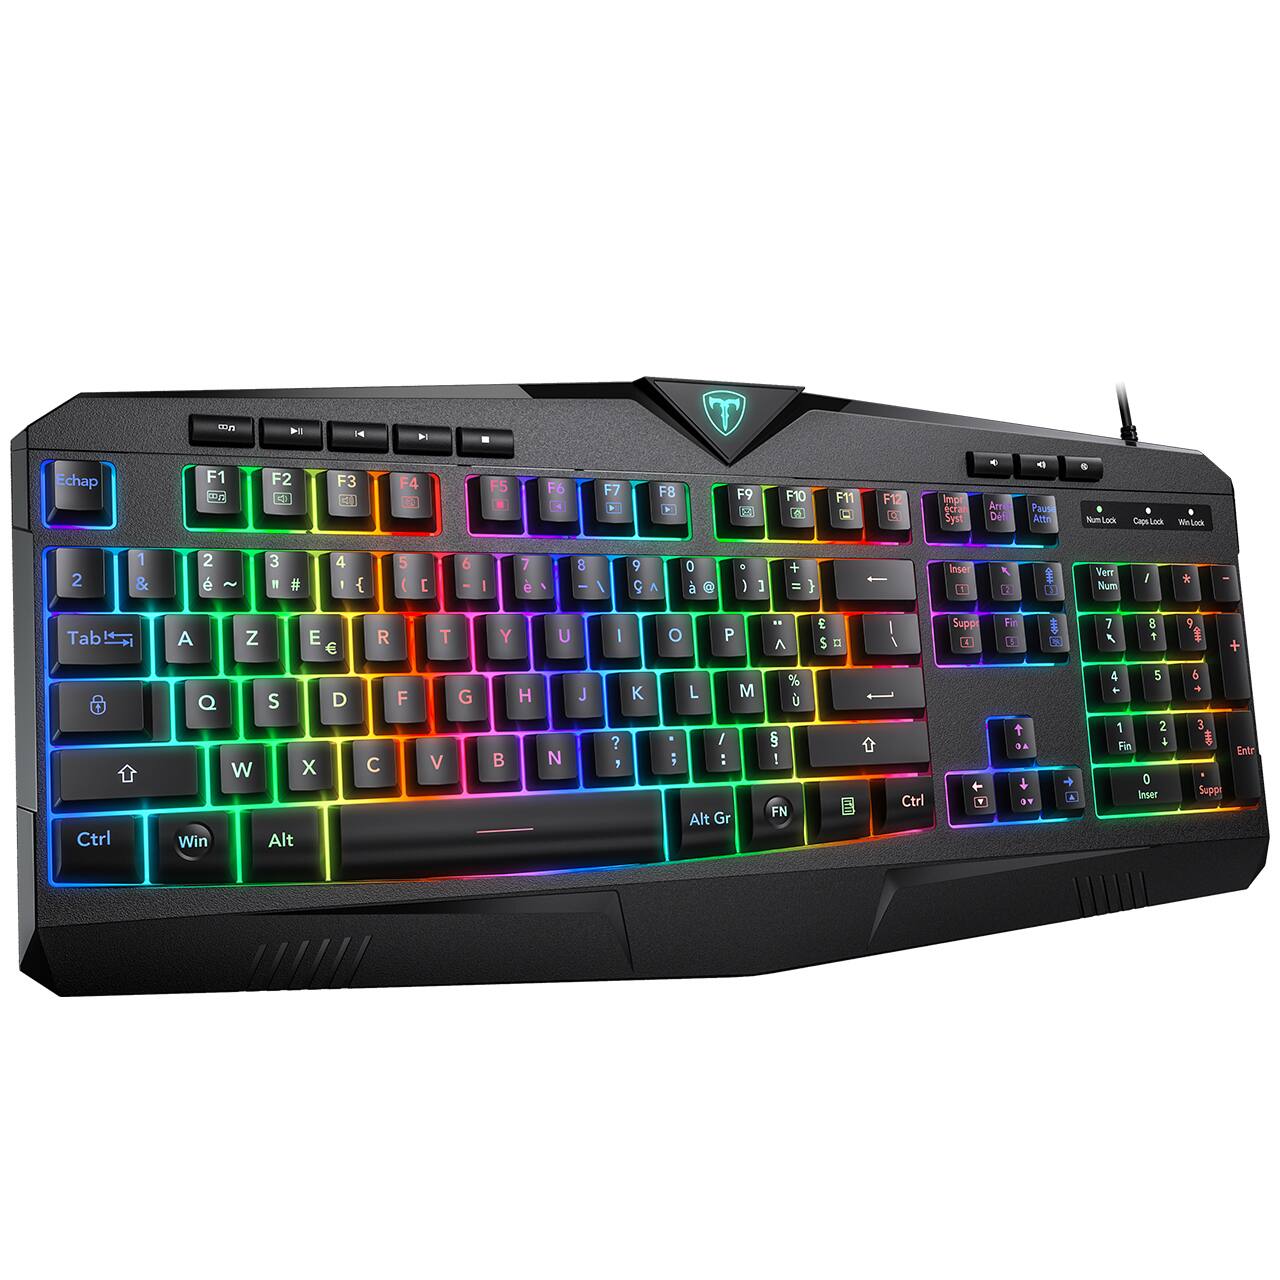 PICTEK RGB Gaming Keyboard with Multimedia Keys $13.99 AC + FSSS